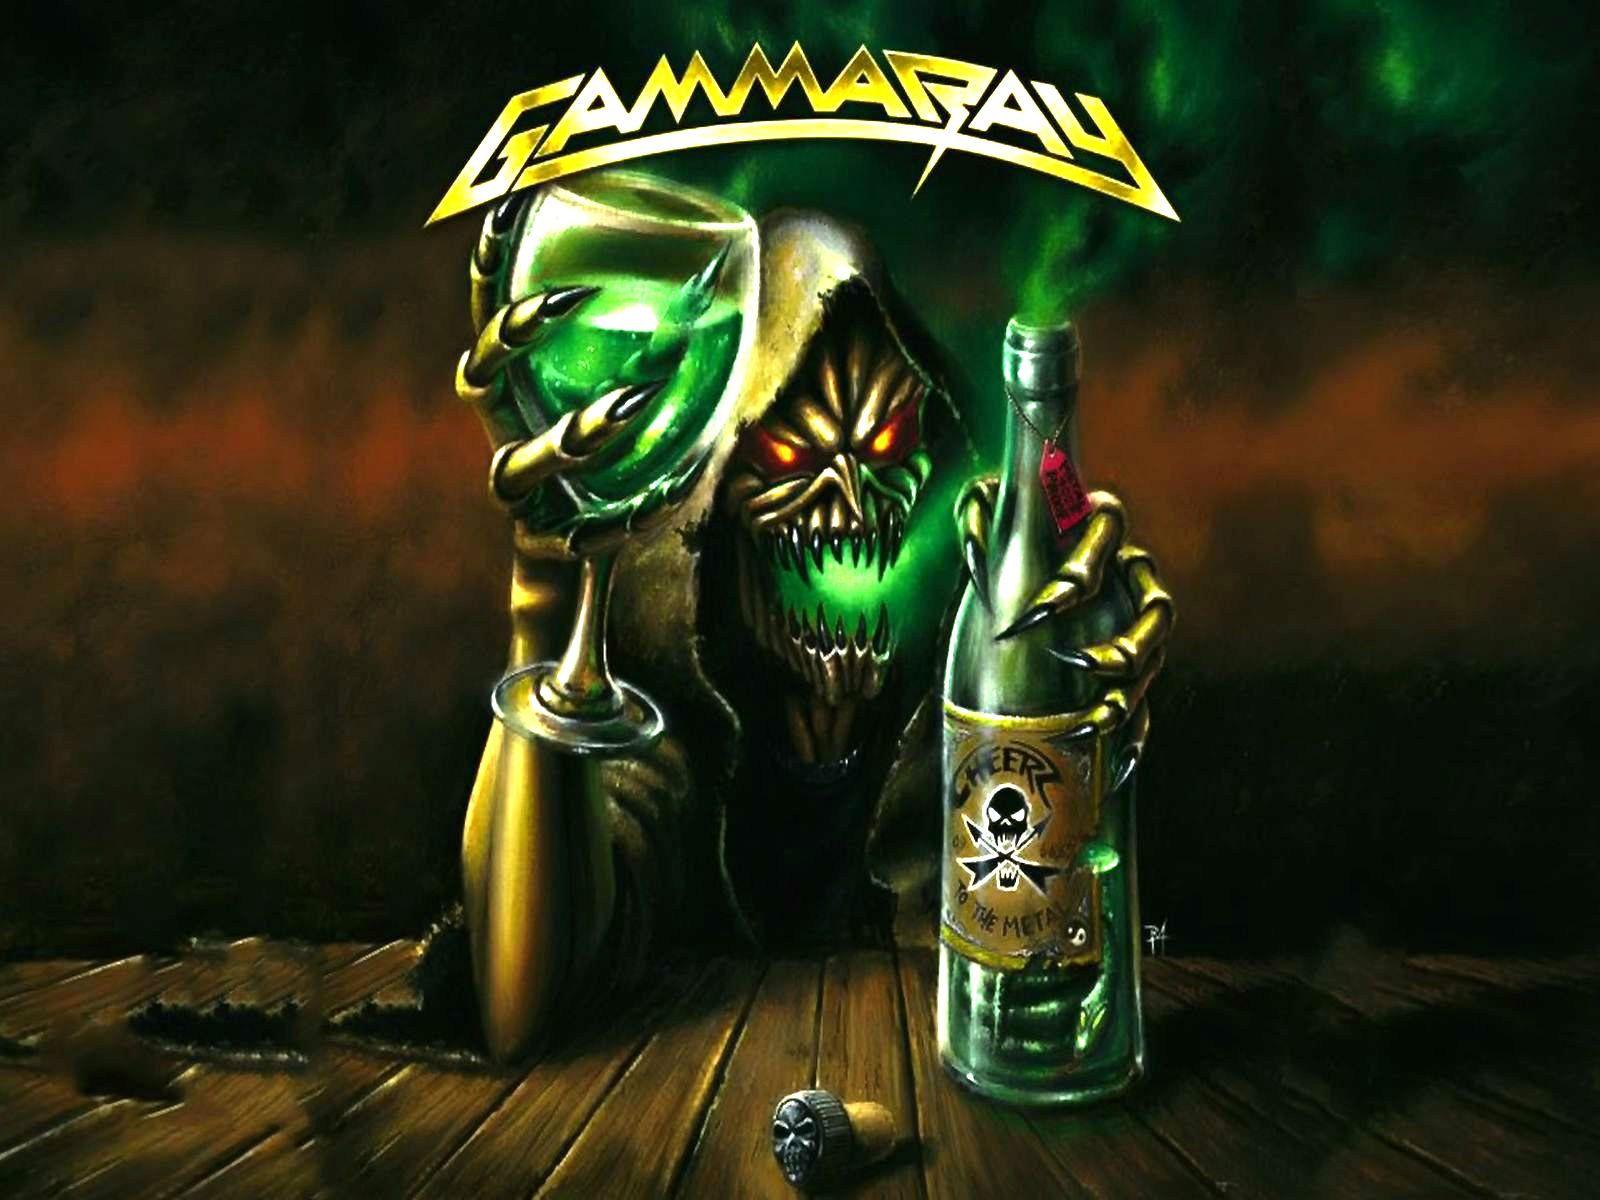 GAMMA RAY power metal heavy album art cover dark g wallpaper